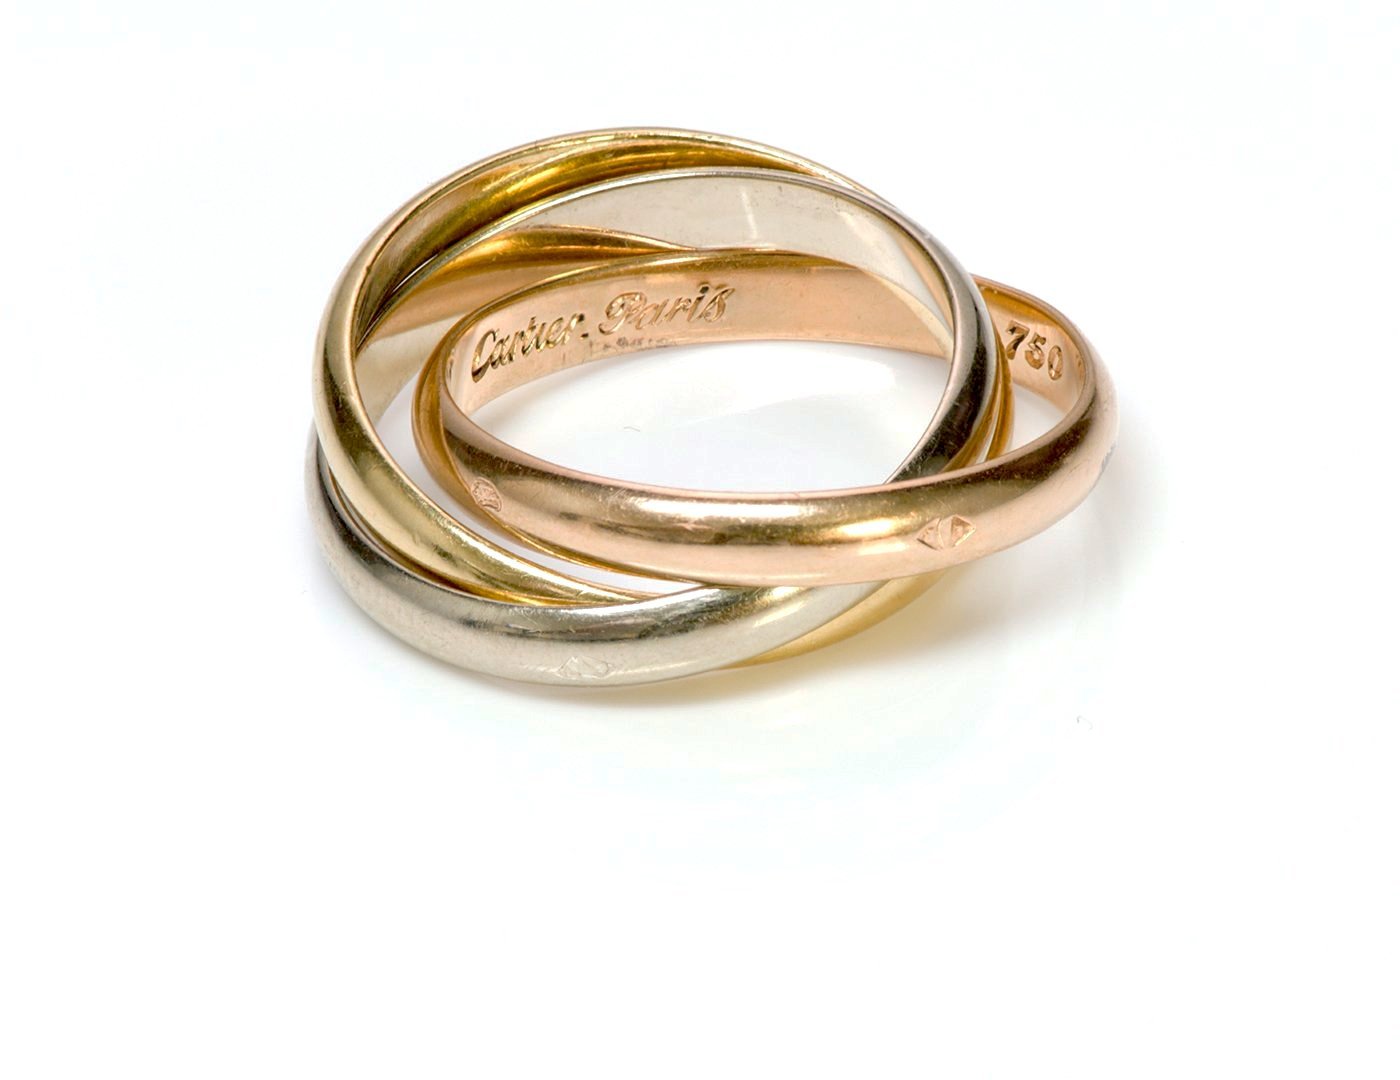 Cartier Paris Trinity 18K Gold Ring Band